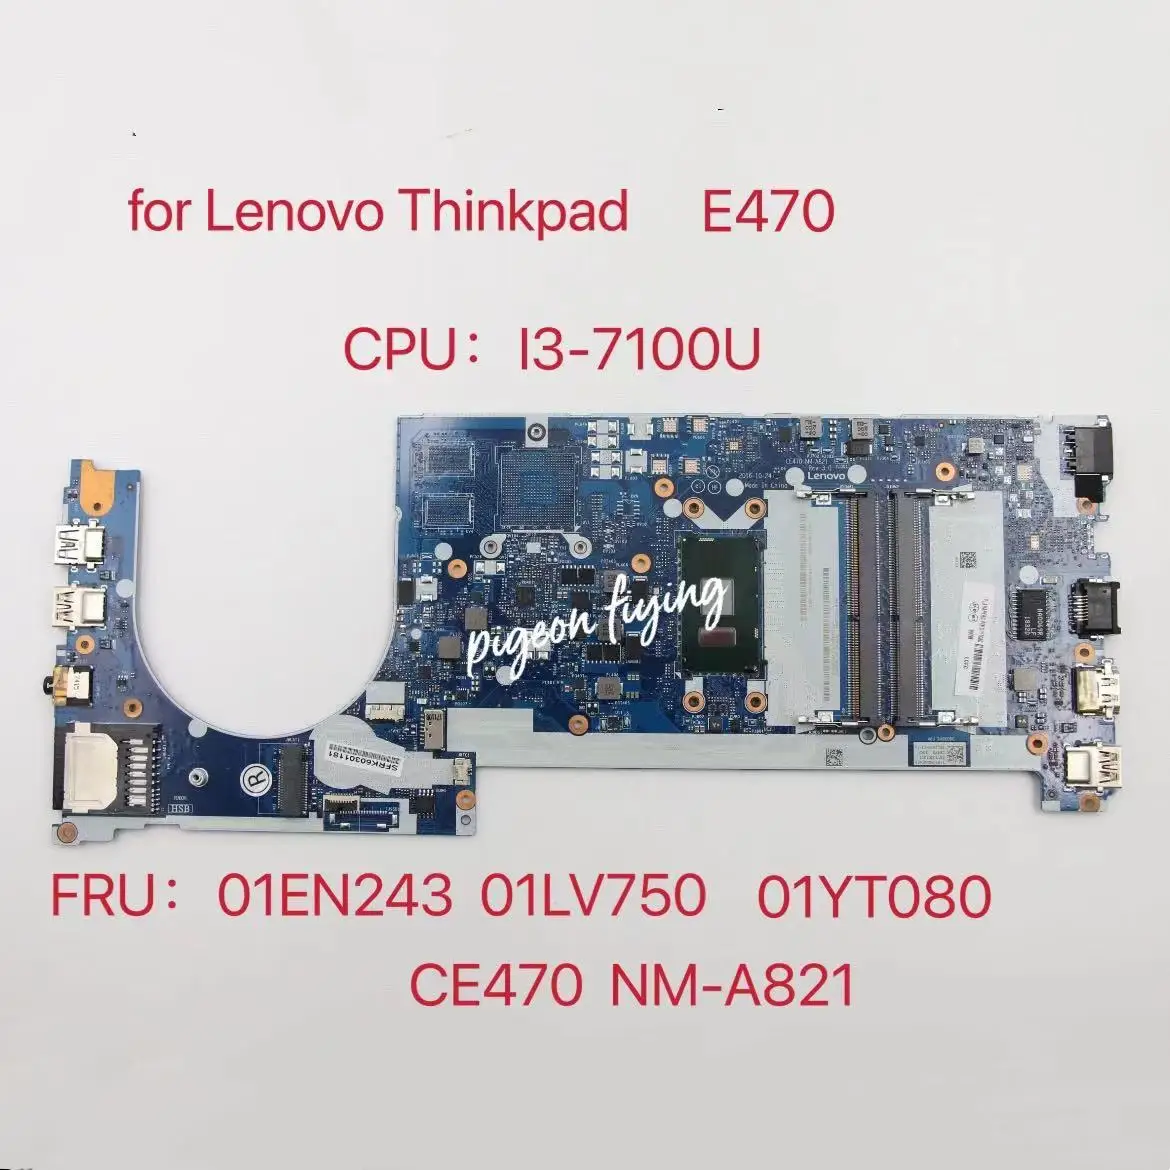 за Lenvov Thinkpad E470 E470C дънна Платка на лаптоп ПРОЦЕСОР: I3-7100U UAM CE470 NM-A821 100% Тест ок Изображение 0 